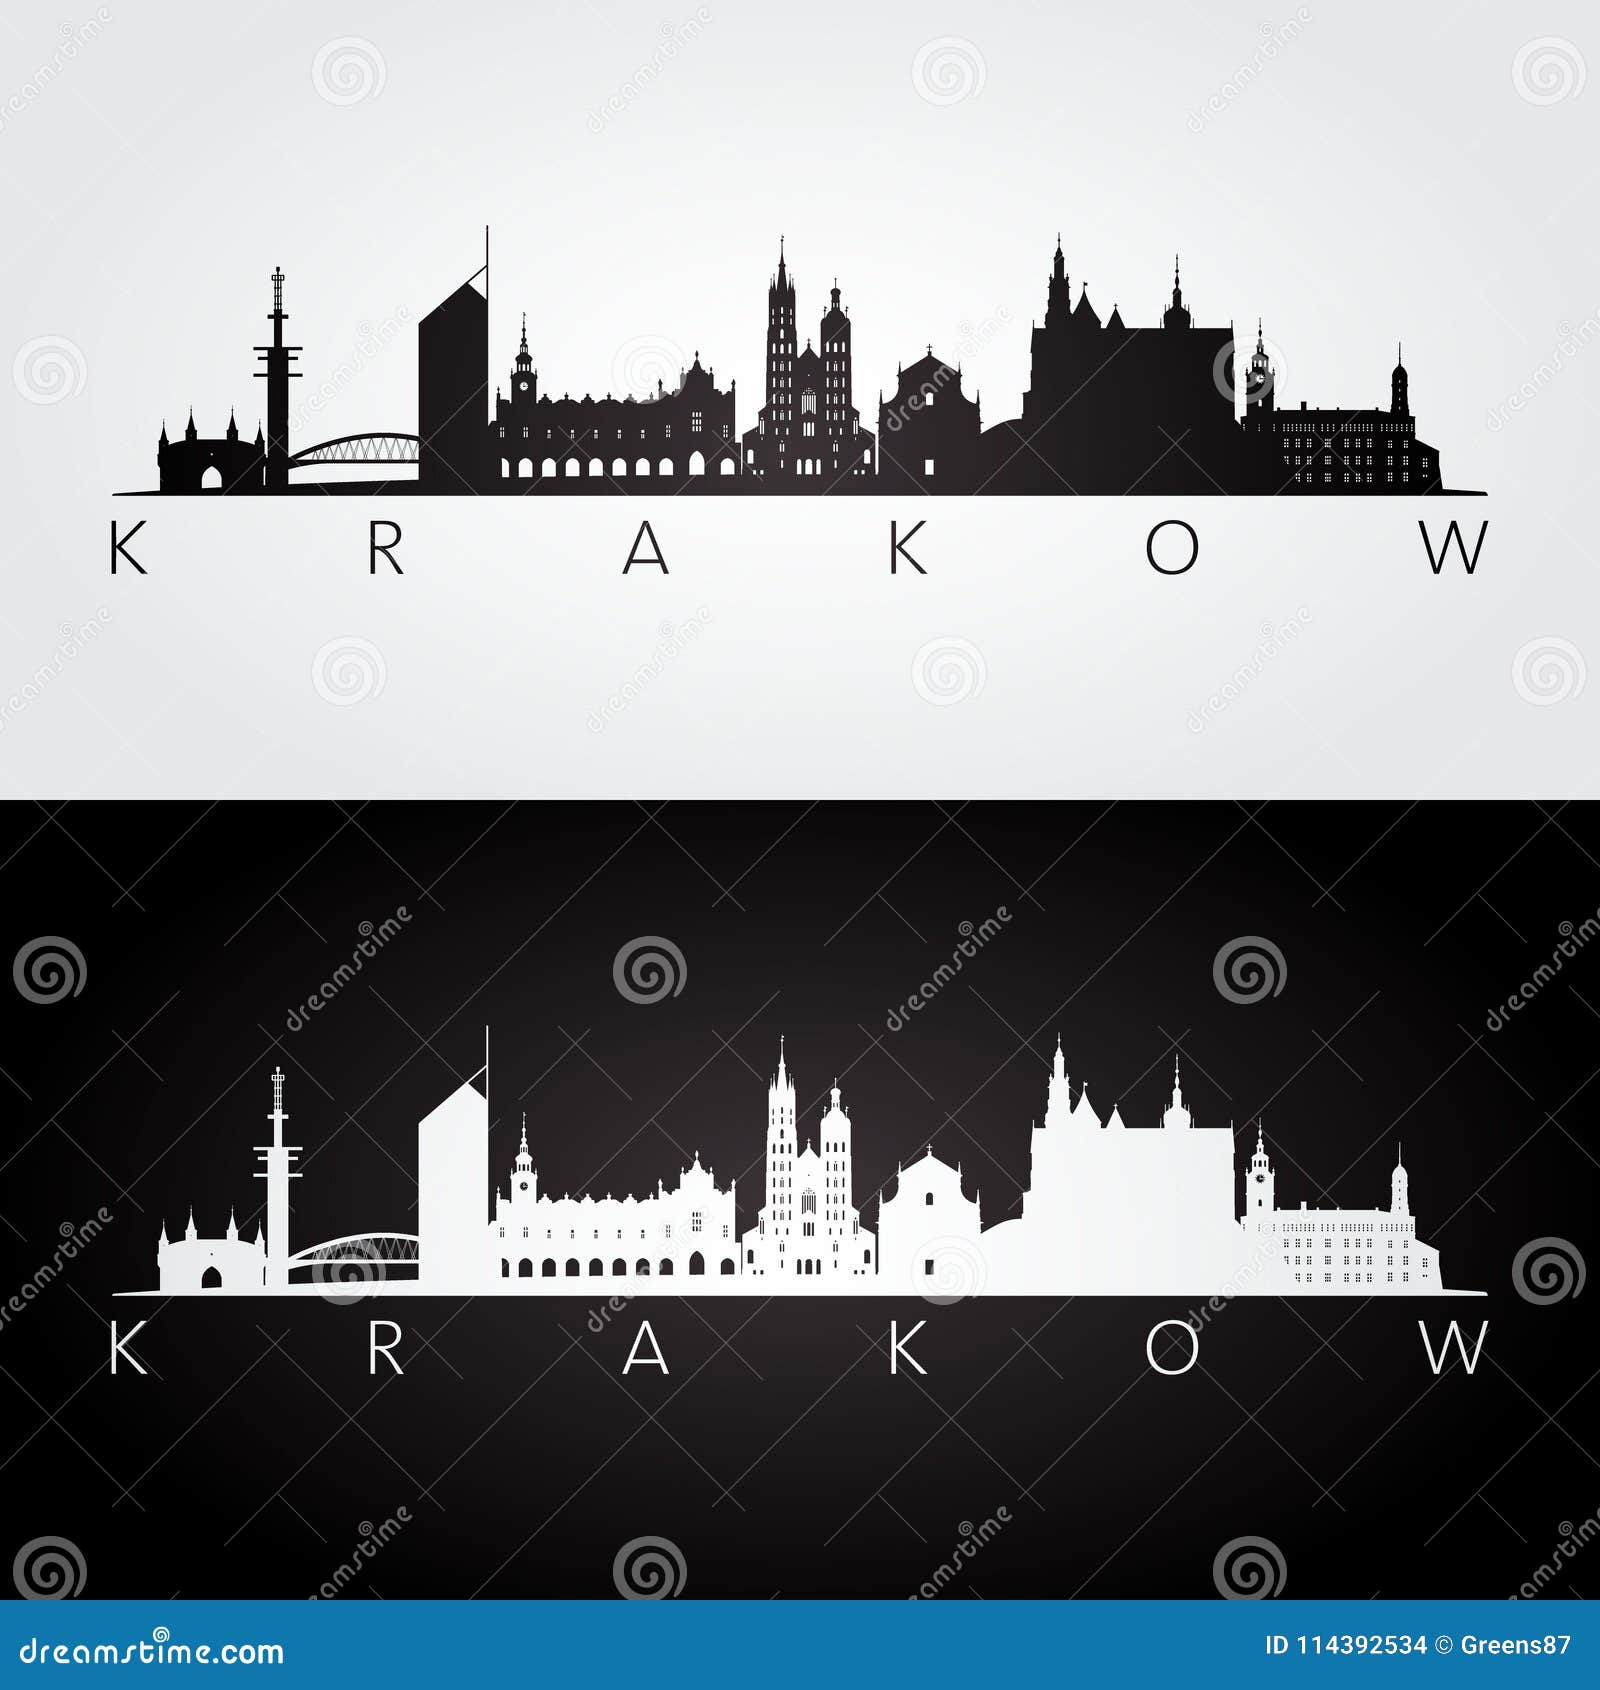 krakow skyline and landmarks silhouette